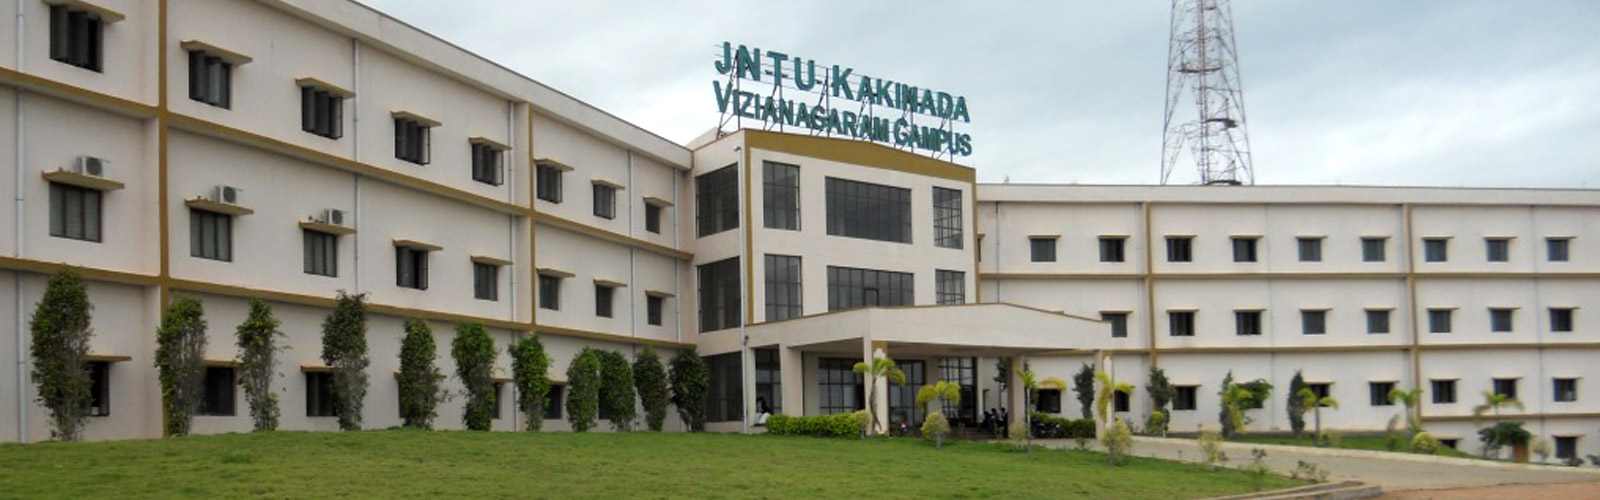 JNTUK University College of Engineering, Vizianagaram Image